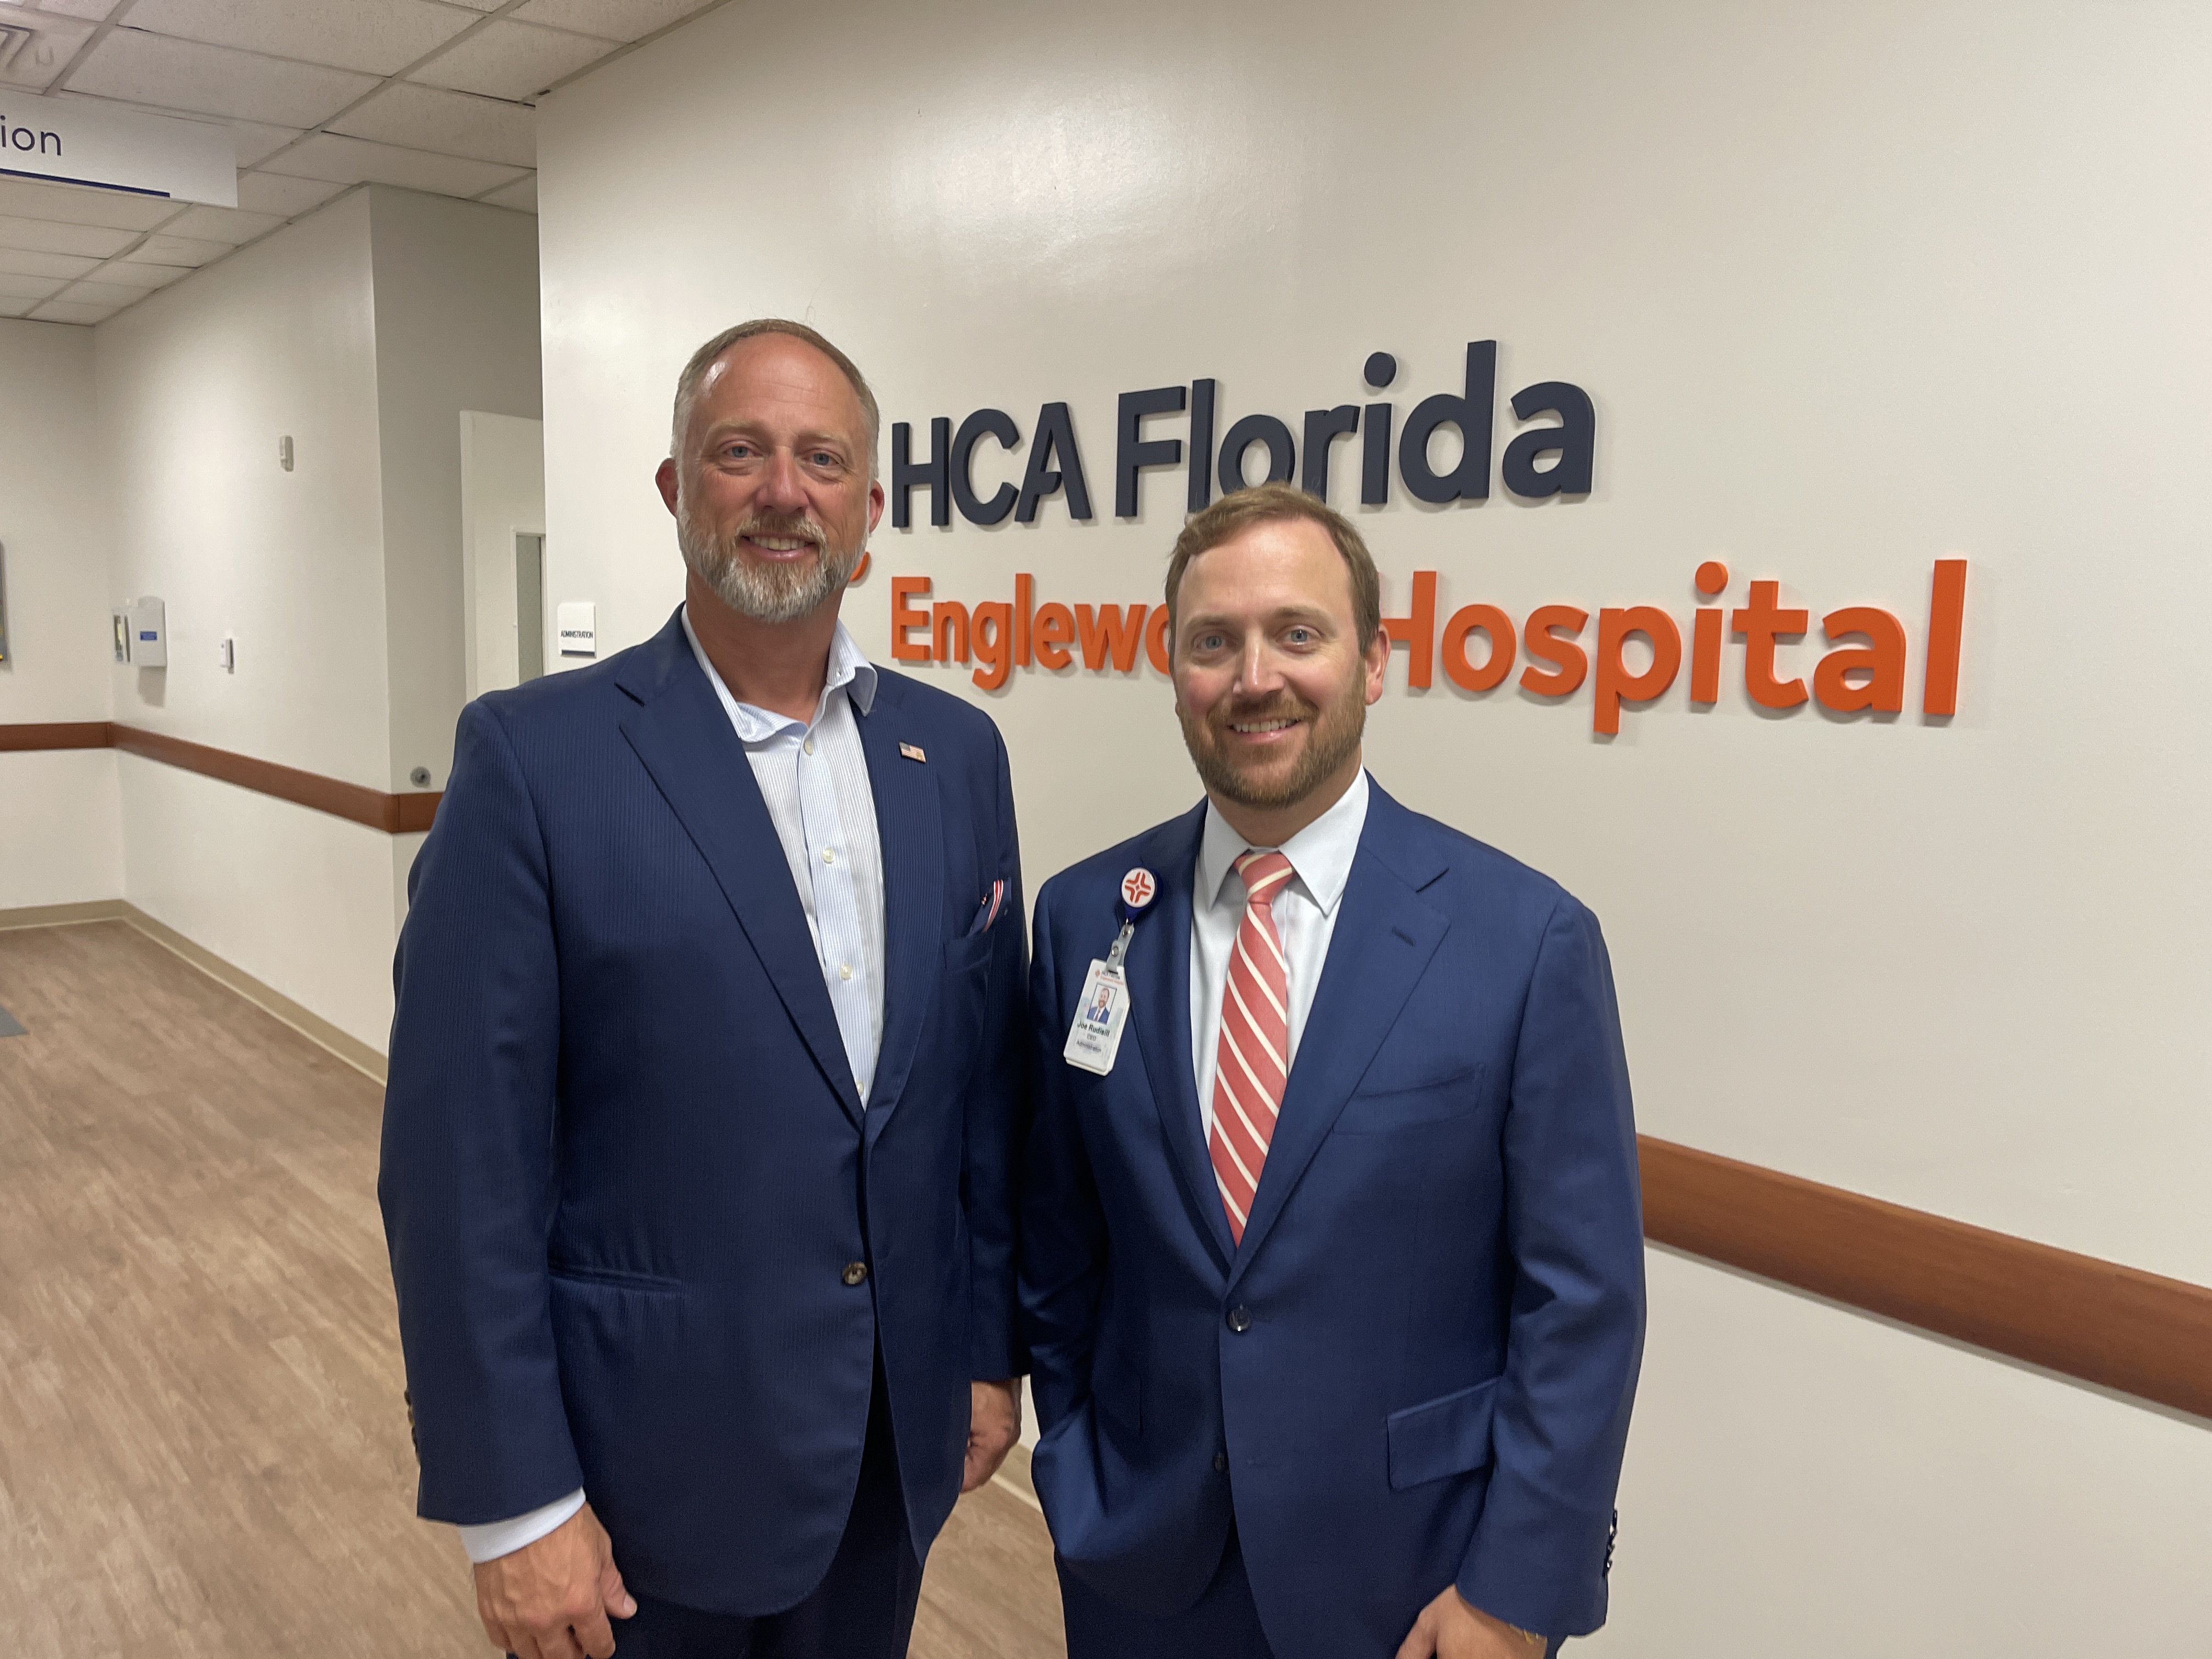 Danny Nix and Joe Rudisill, CEO of HCA Florida Englewood Hospital, pose for camera